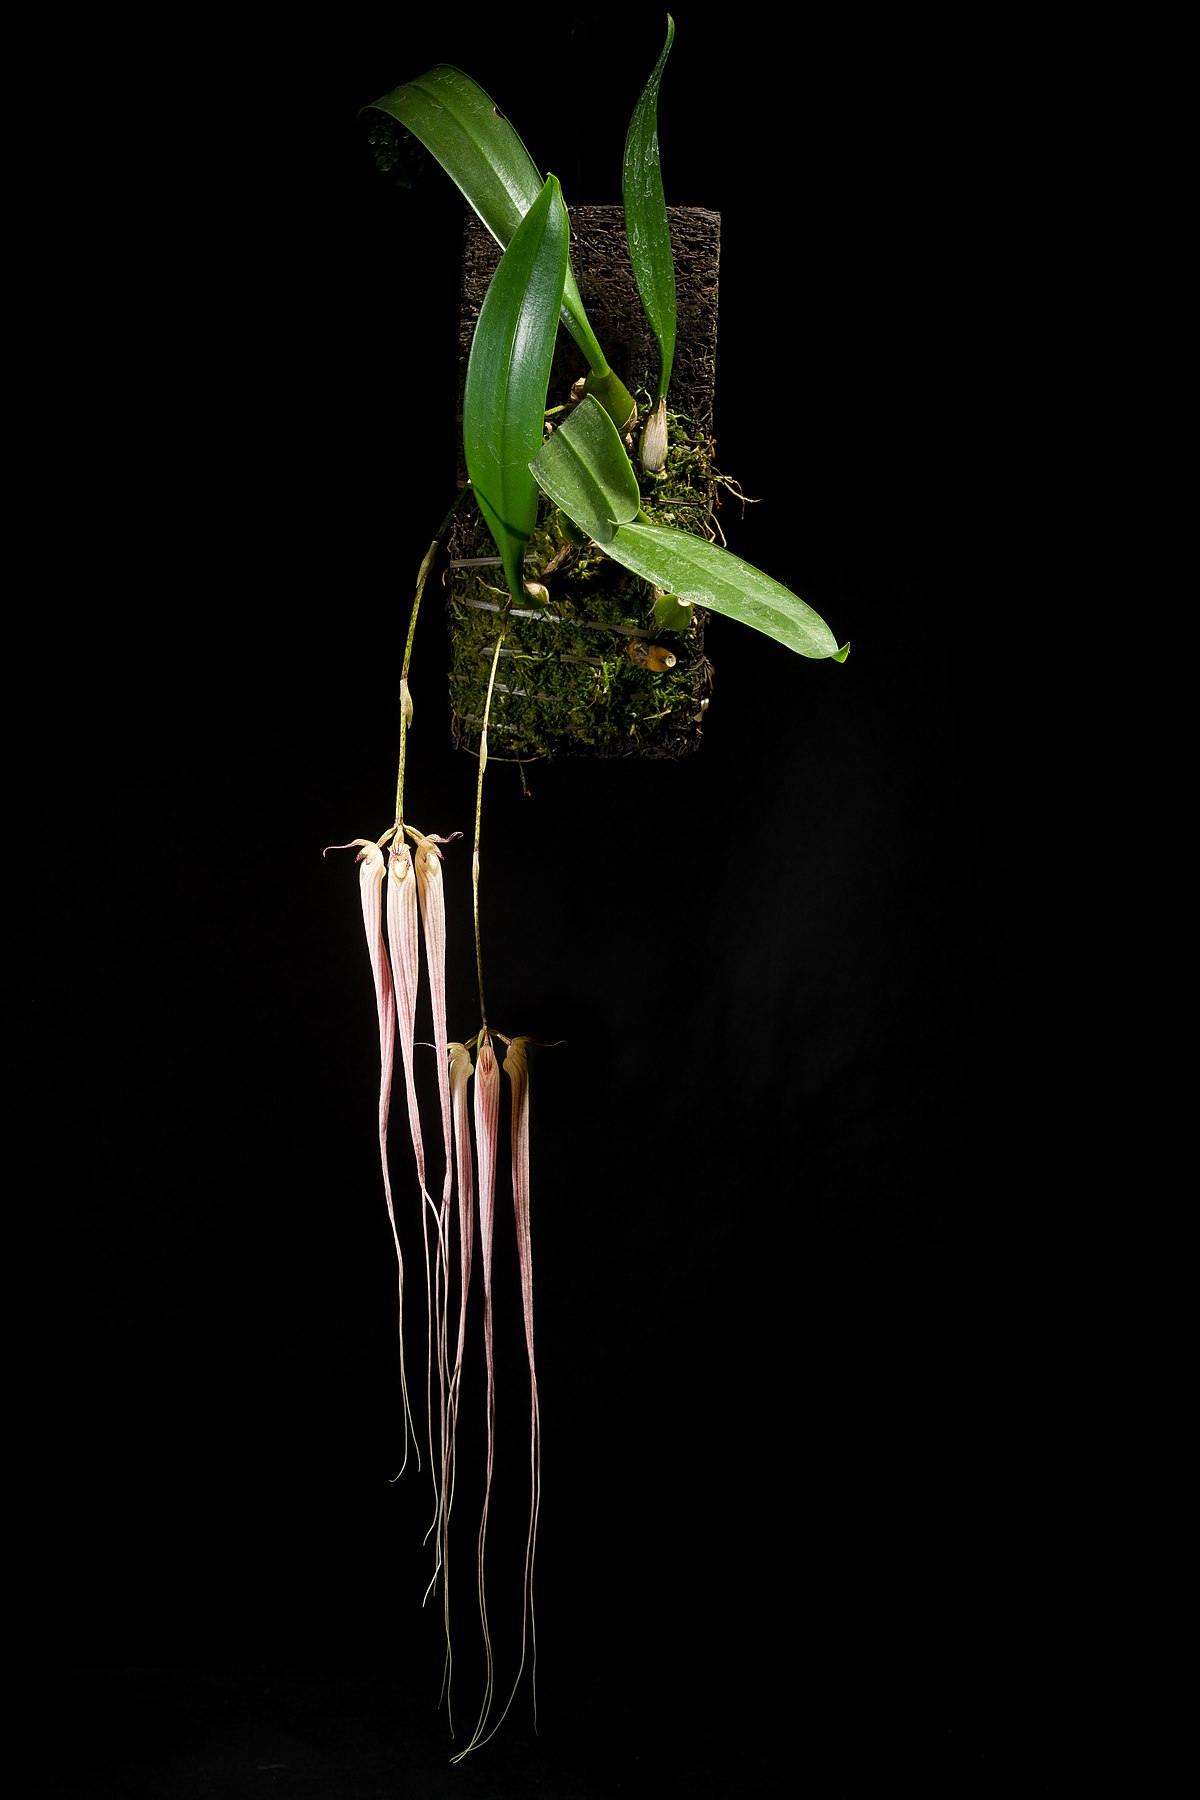 File:Bulbophyllum longissimum 'Fujio' SM JOGA (Ridl.) J.J.Sm., Bull. Jard.  Bot. Buitenzorg, sér. 2, 8 25 (1912) (49268605983).jpg - Wikimedia Commons